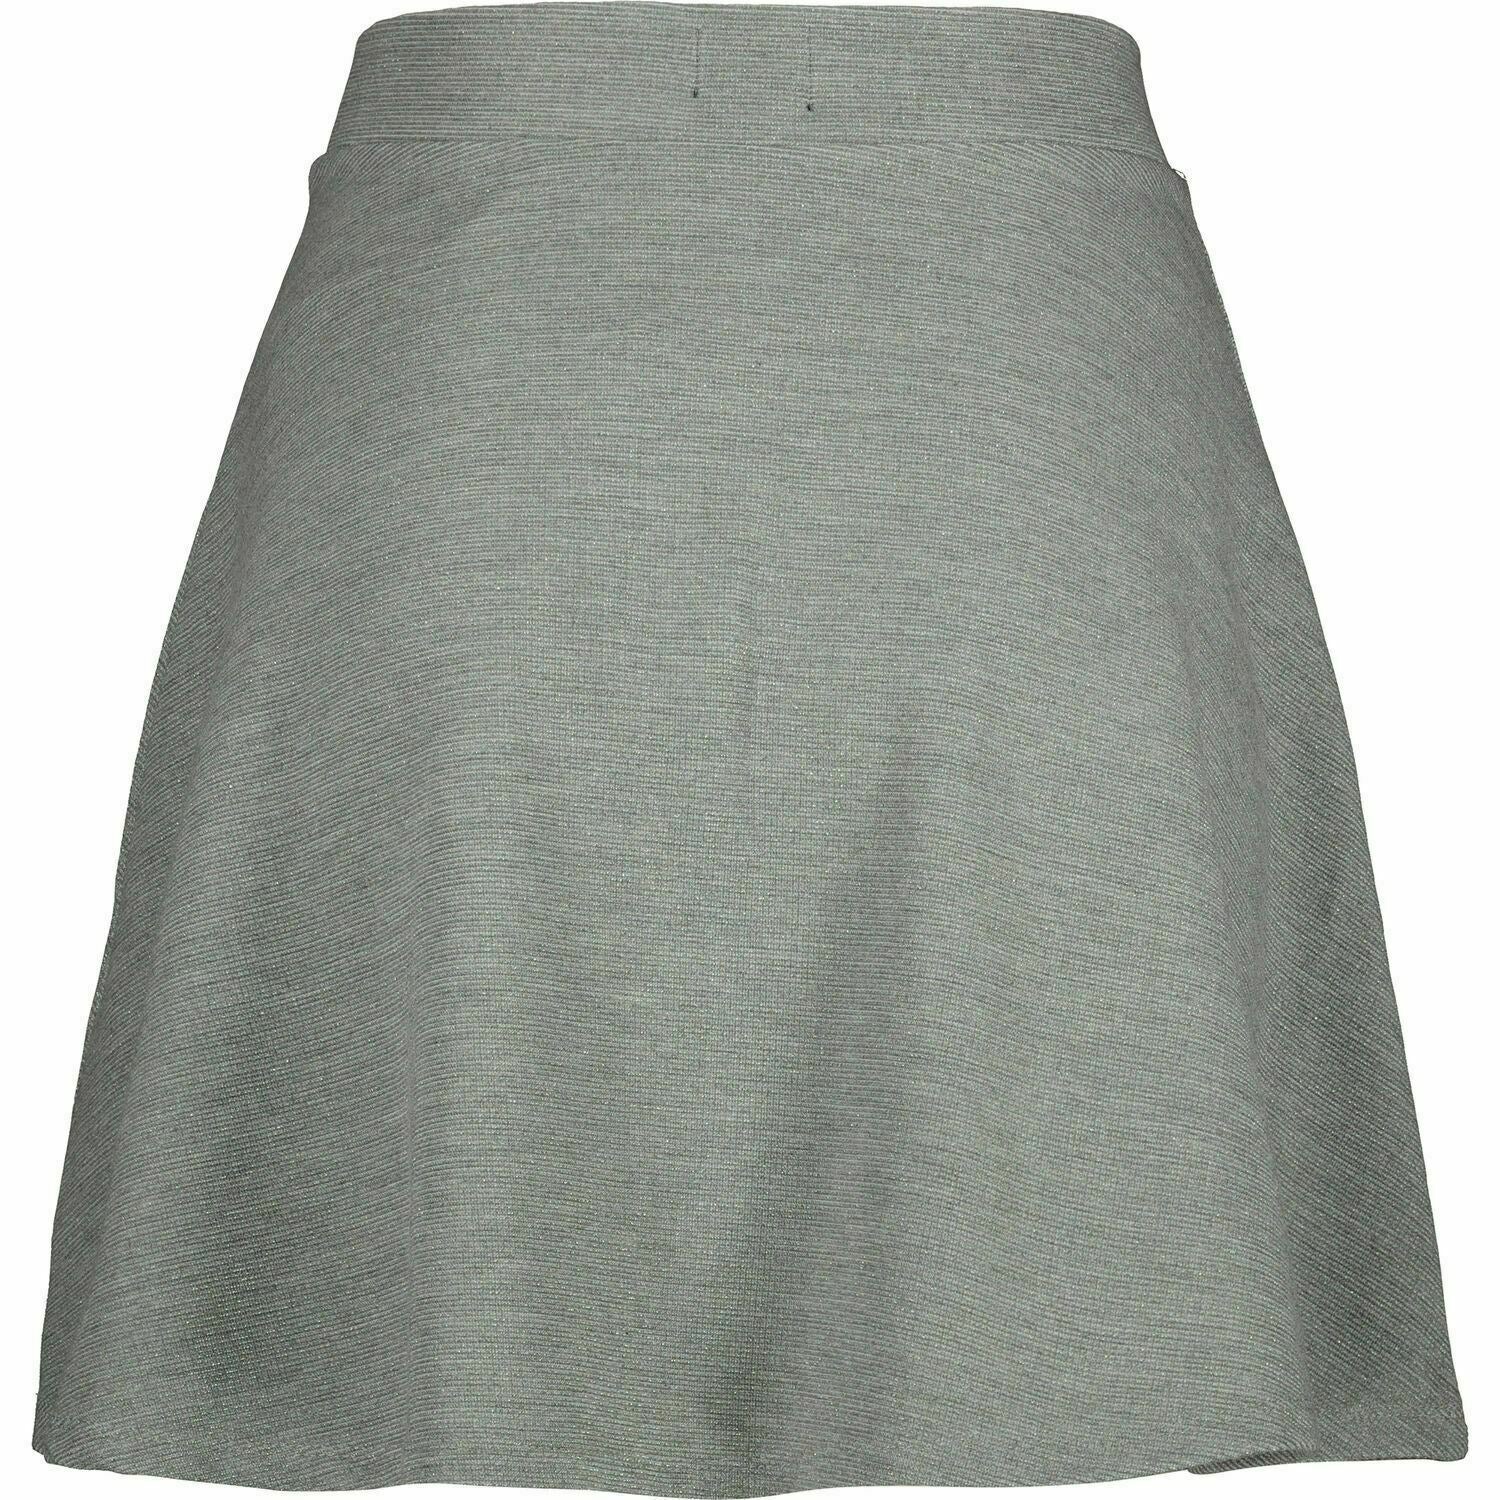 SUPERDRY Women's TAYLA Iron Grey Sparkle Skater Skirt, size S / UK 10